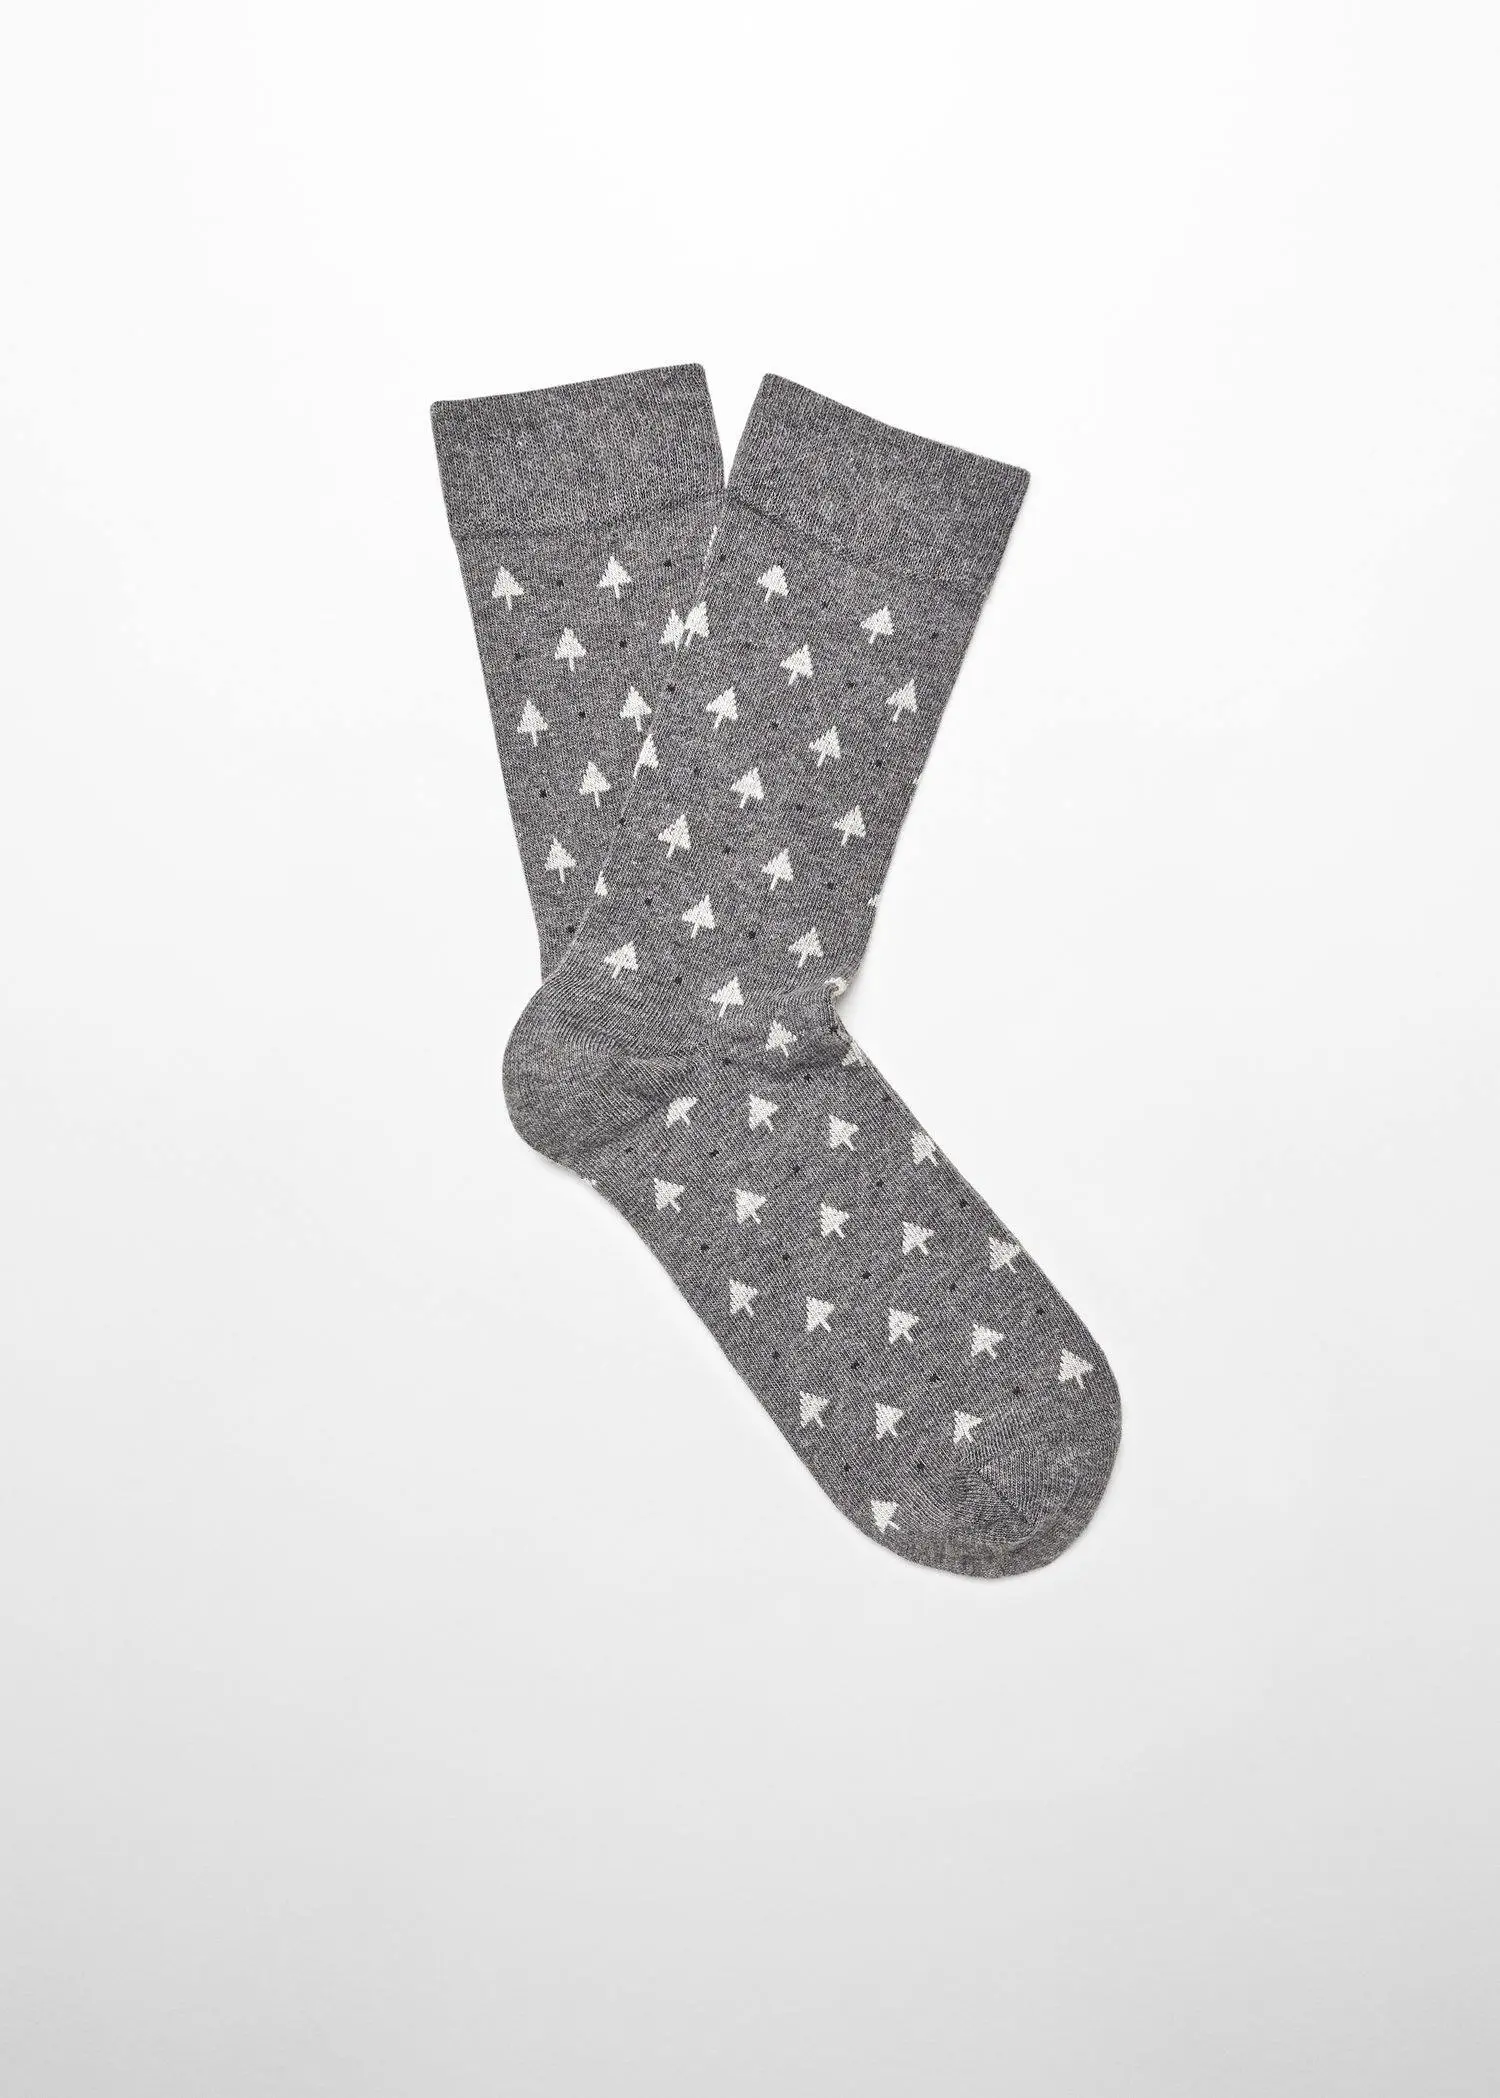 Mango Christmas-print cotton socks. 1